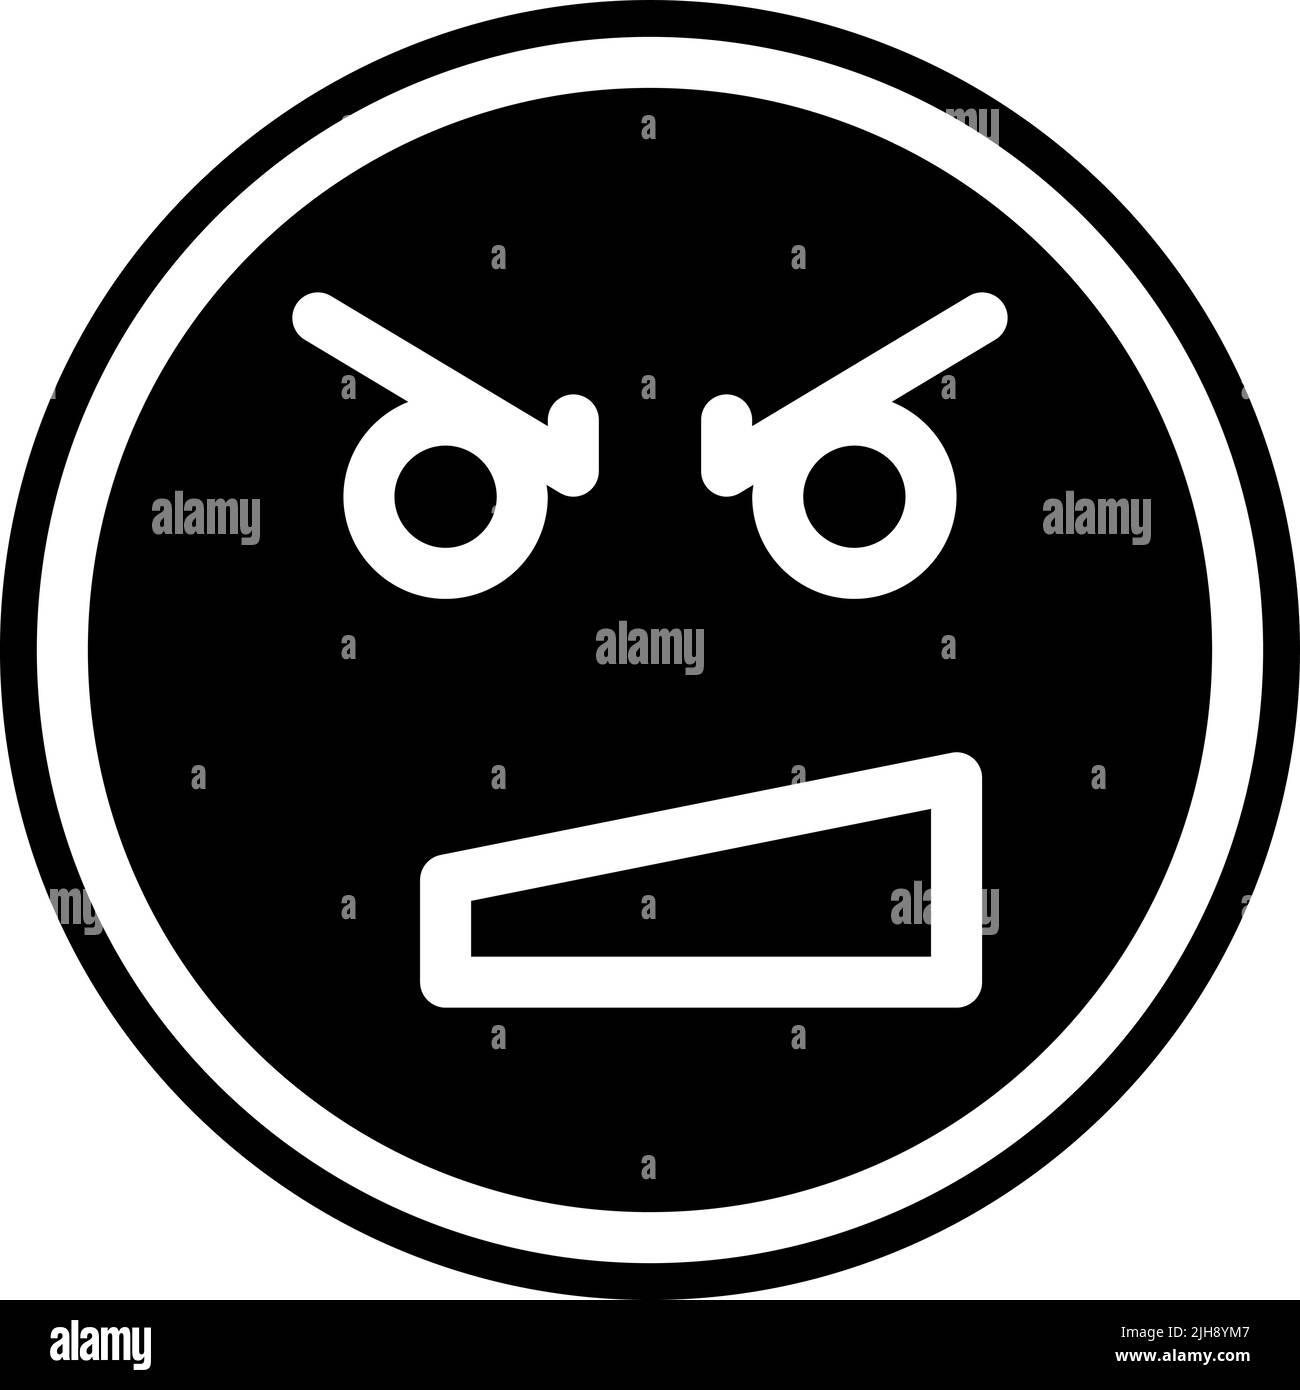 Serious emoji Black and White Stock Photos & Images - Alamy